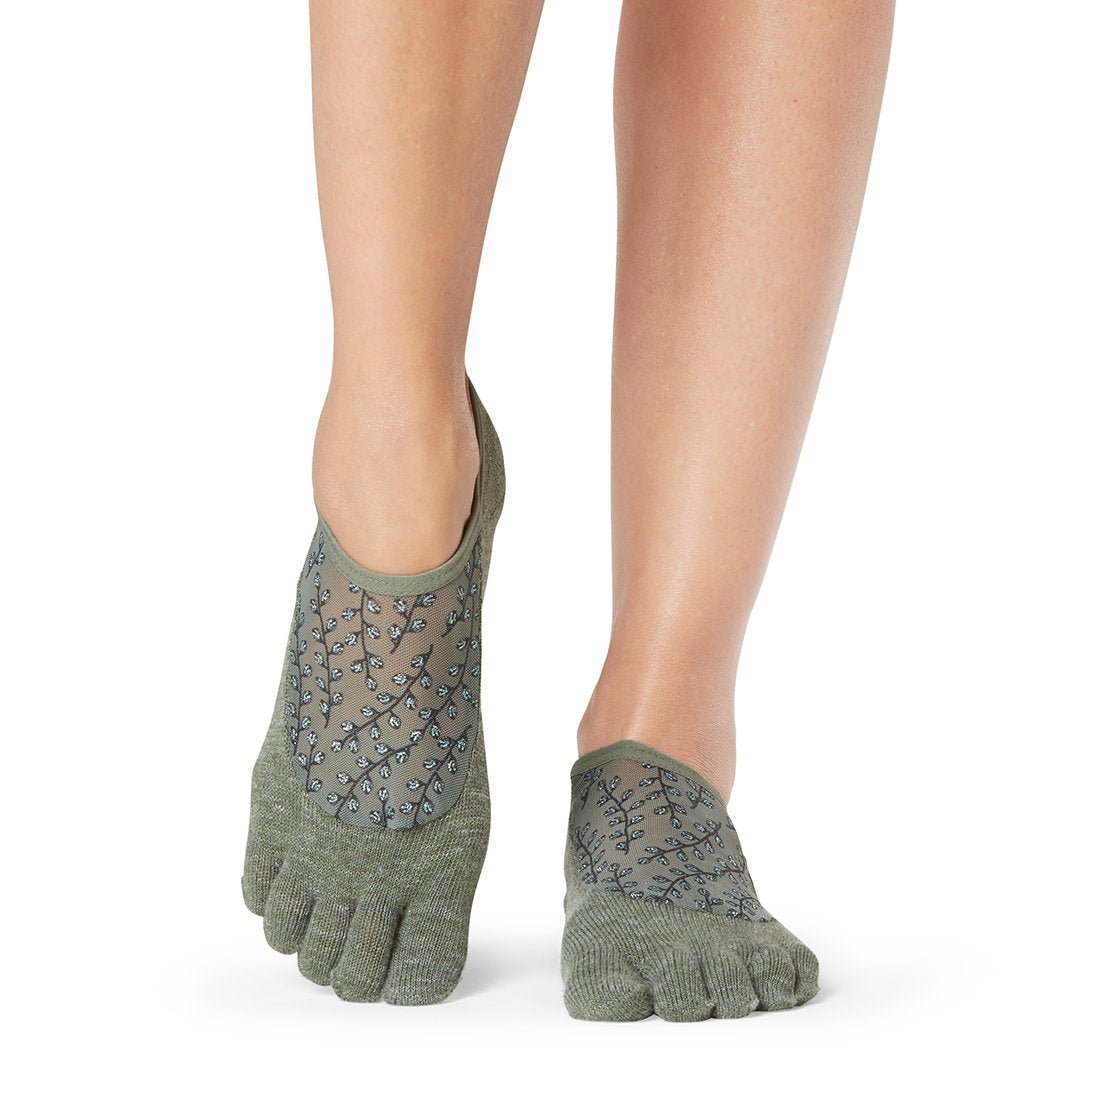 ToeSox - Low Rise Grip Socks - DISNEY - T8 Fitness - Asia Yoga